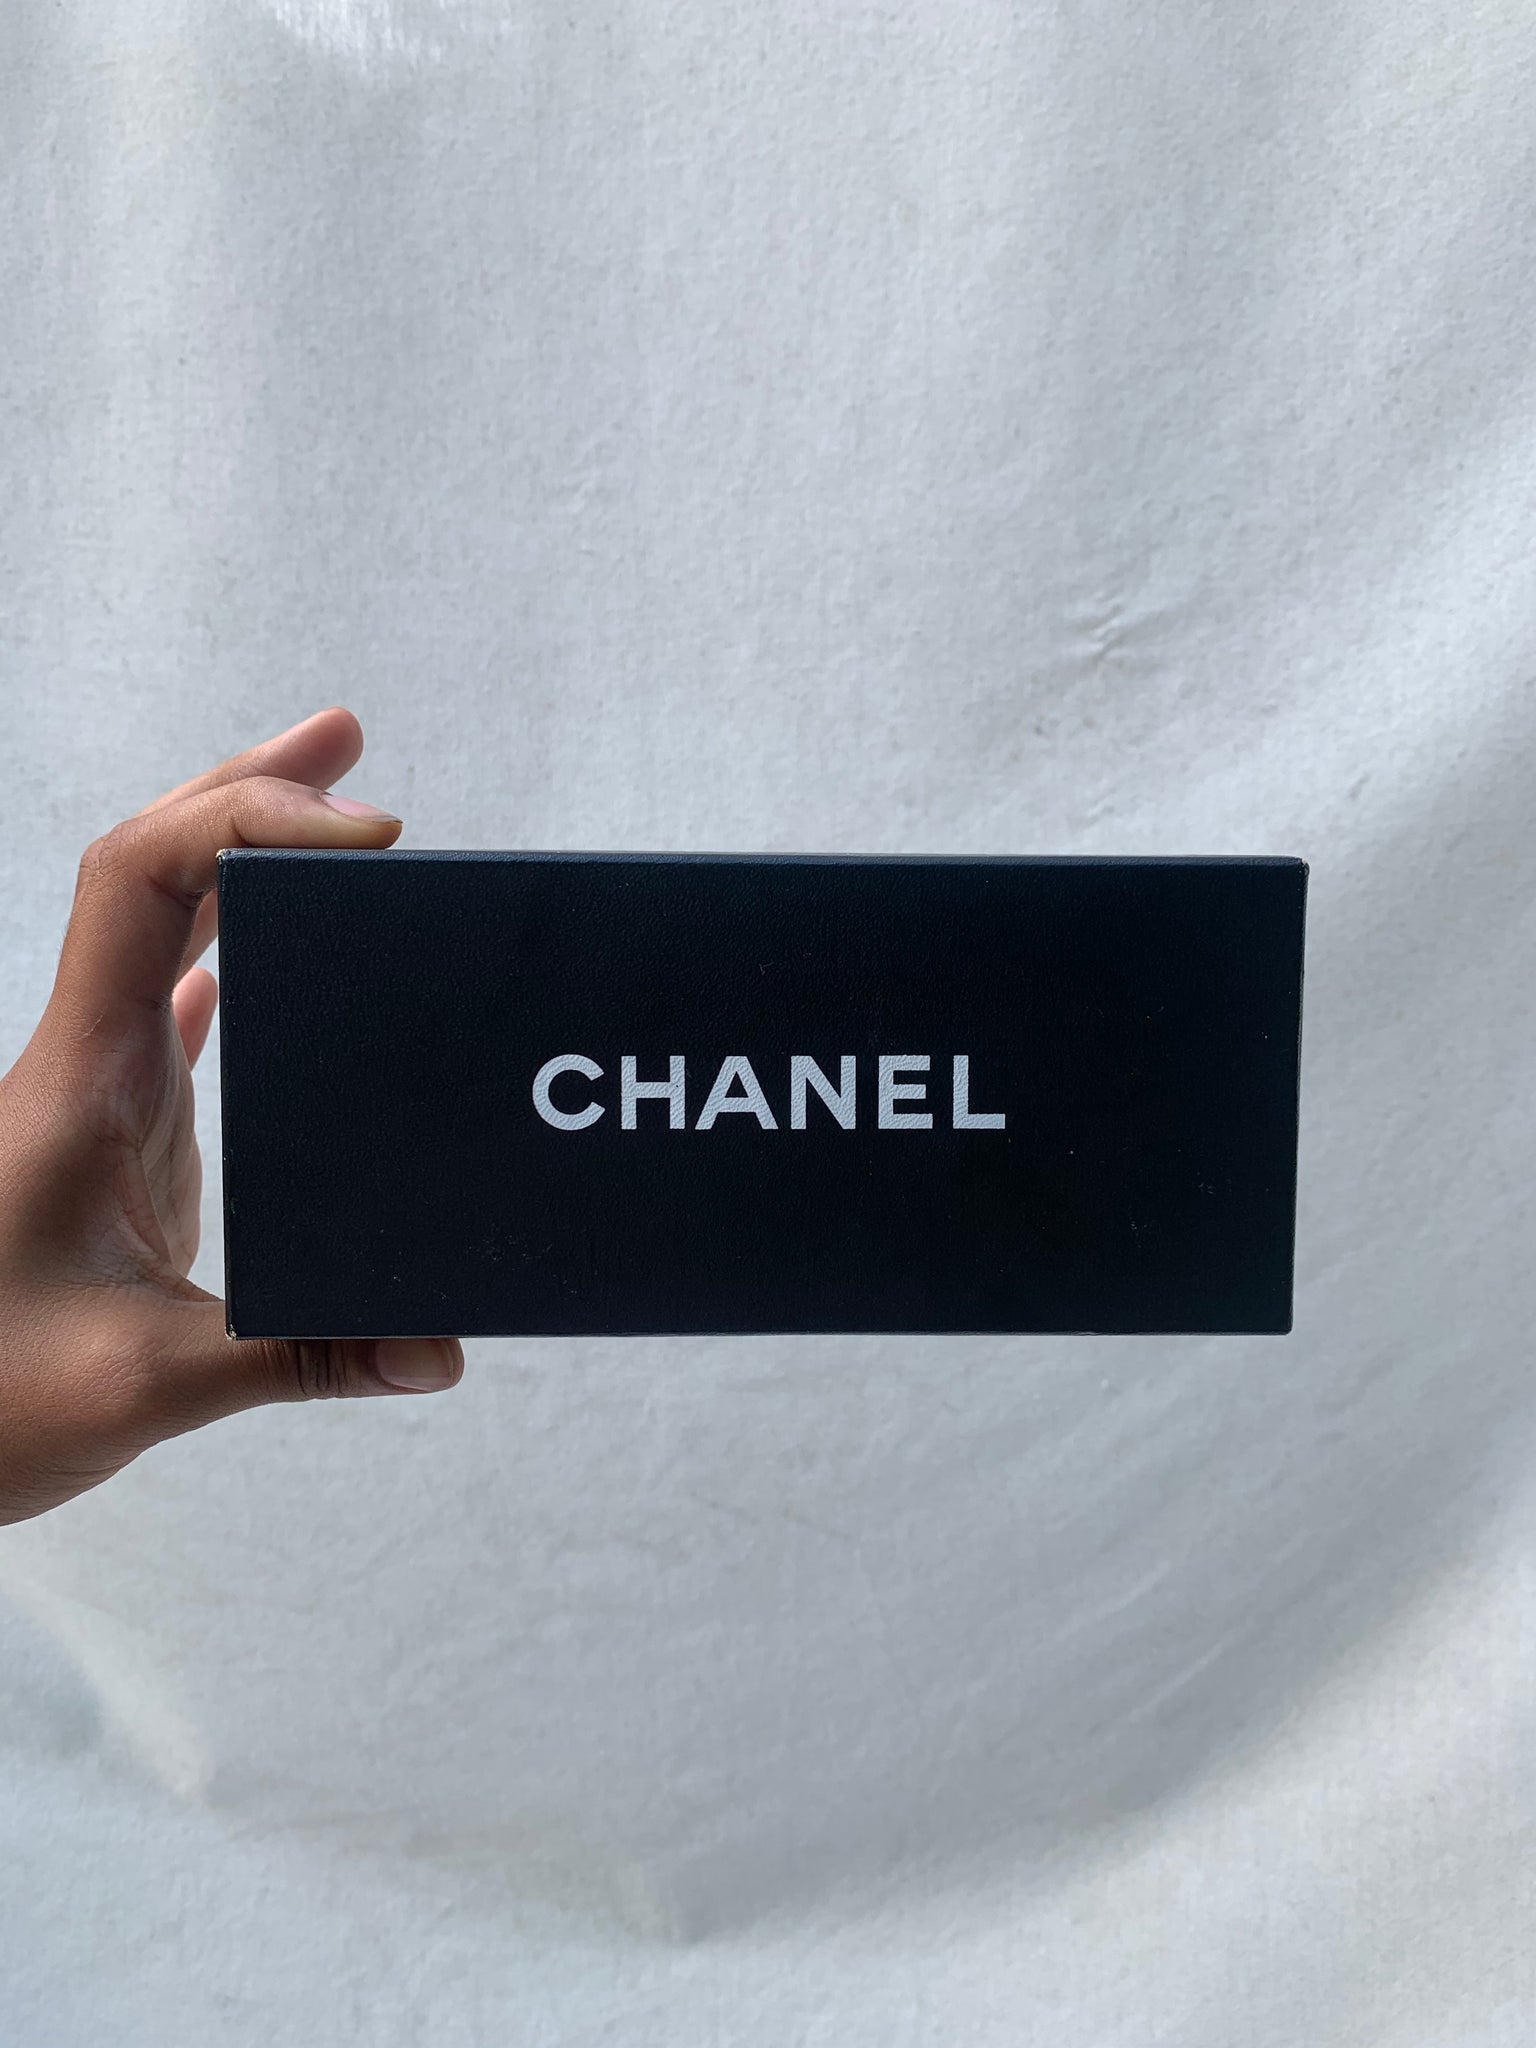 Authentic Black Chanel 4170-H Shield Sunglasses